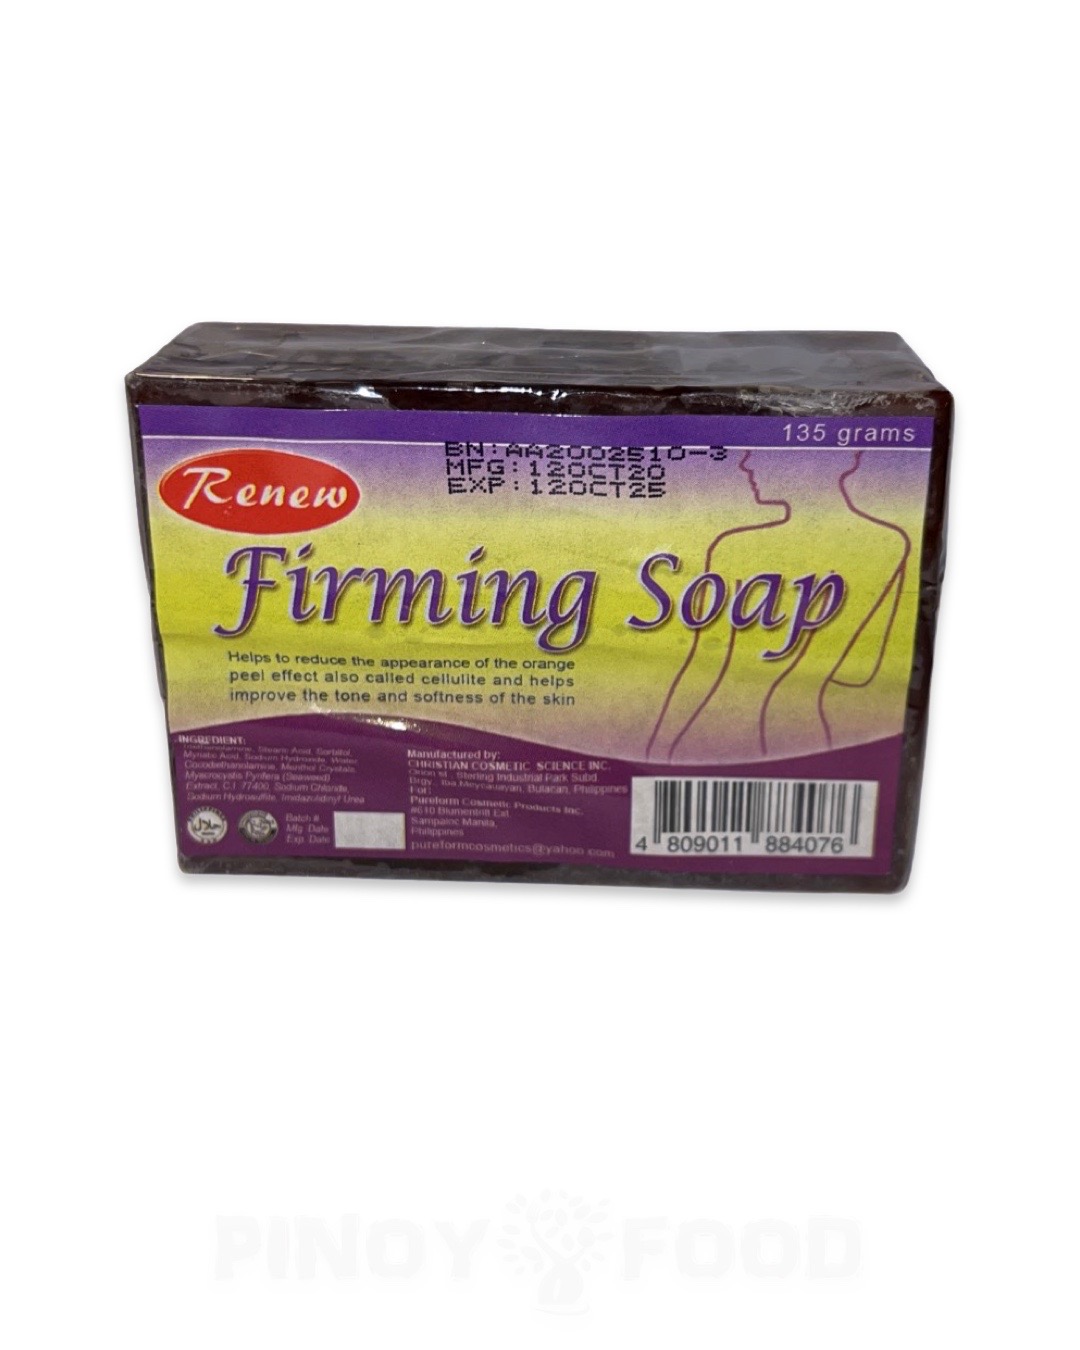 Firming soap